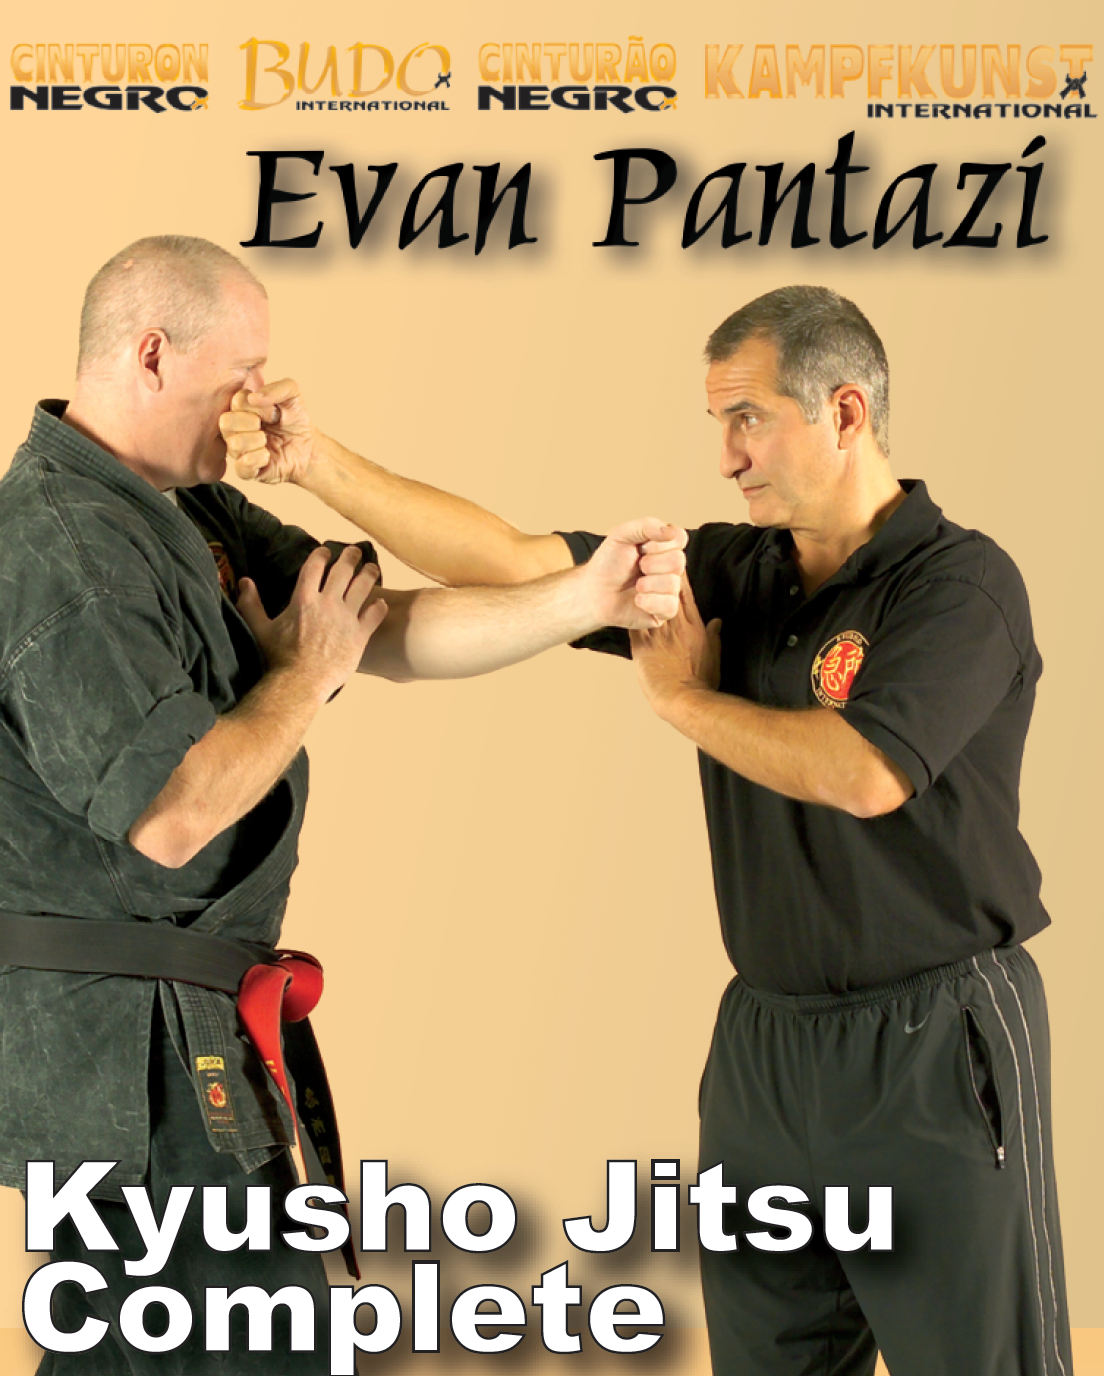 Kyusho Complete 28 DVD Set with Evan Pantazi - Budovideos Inc